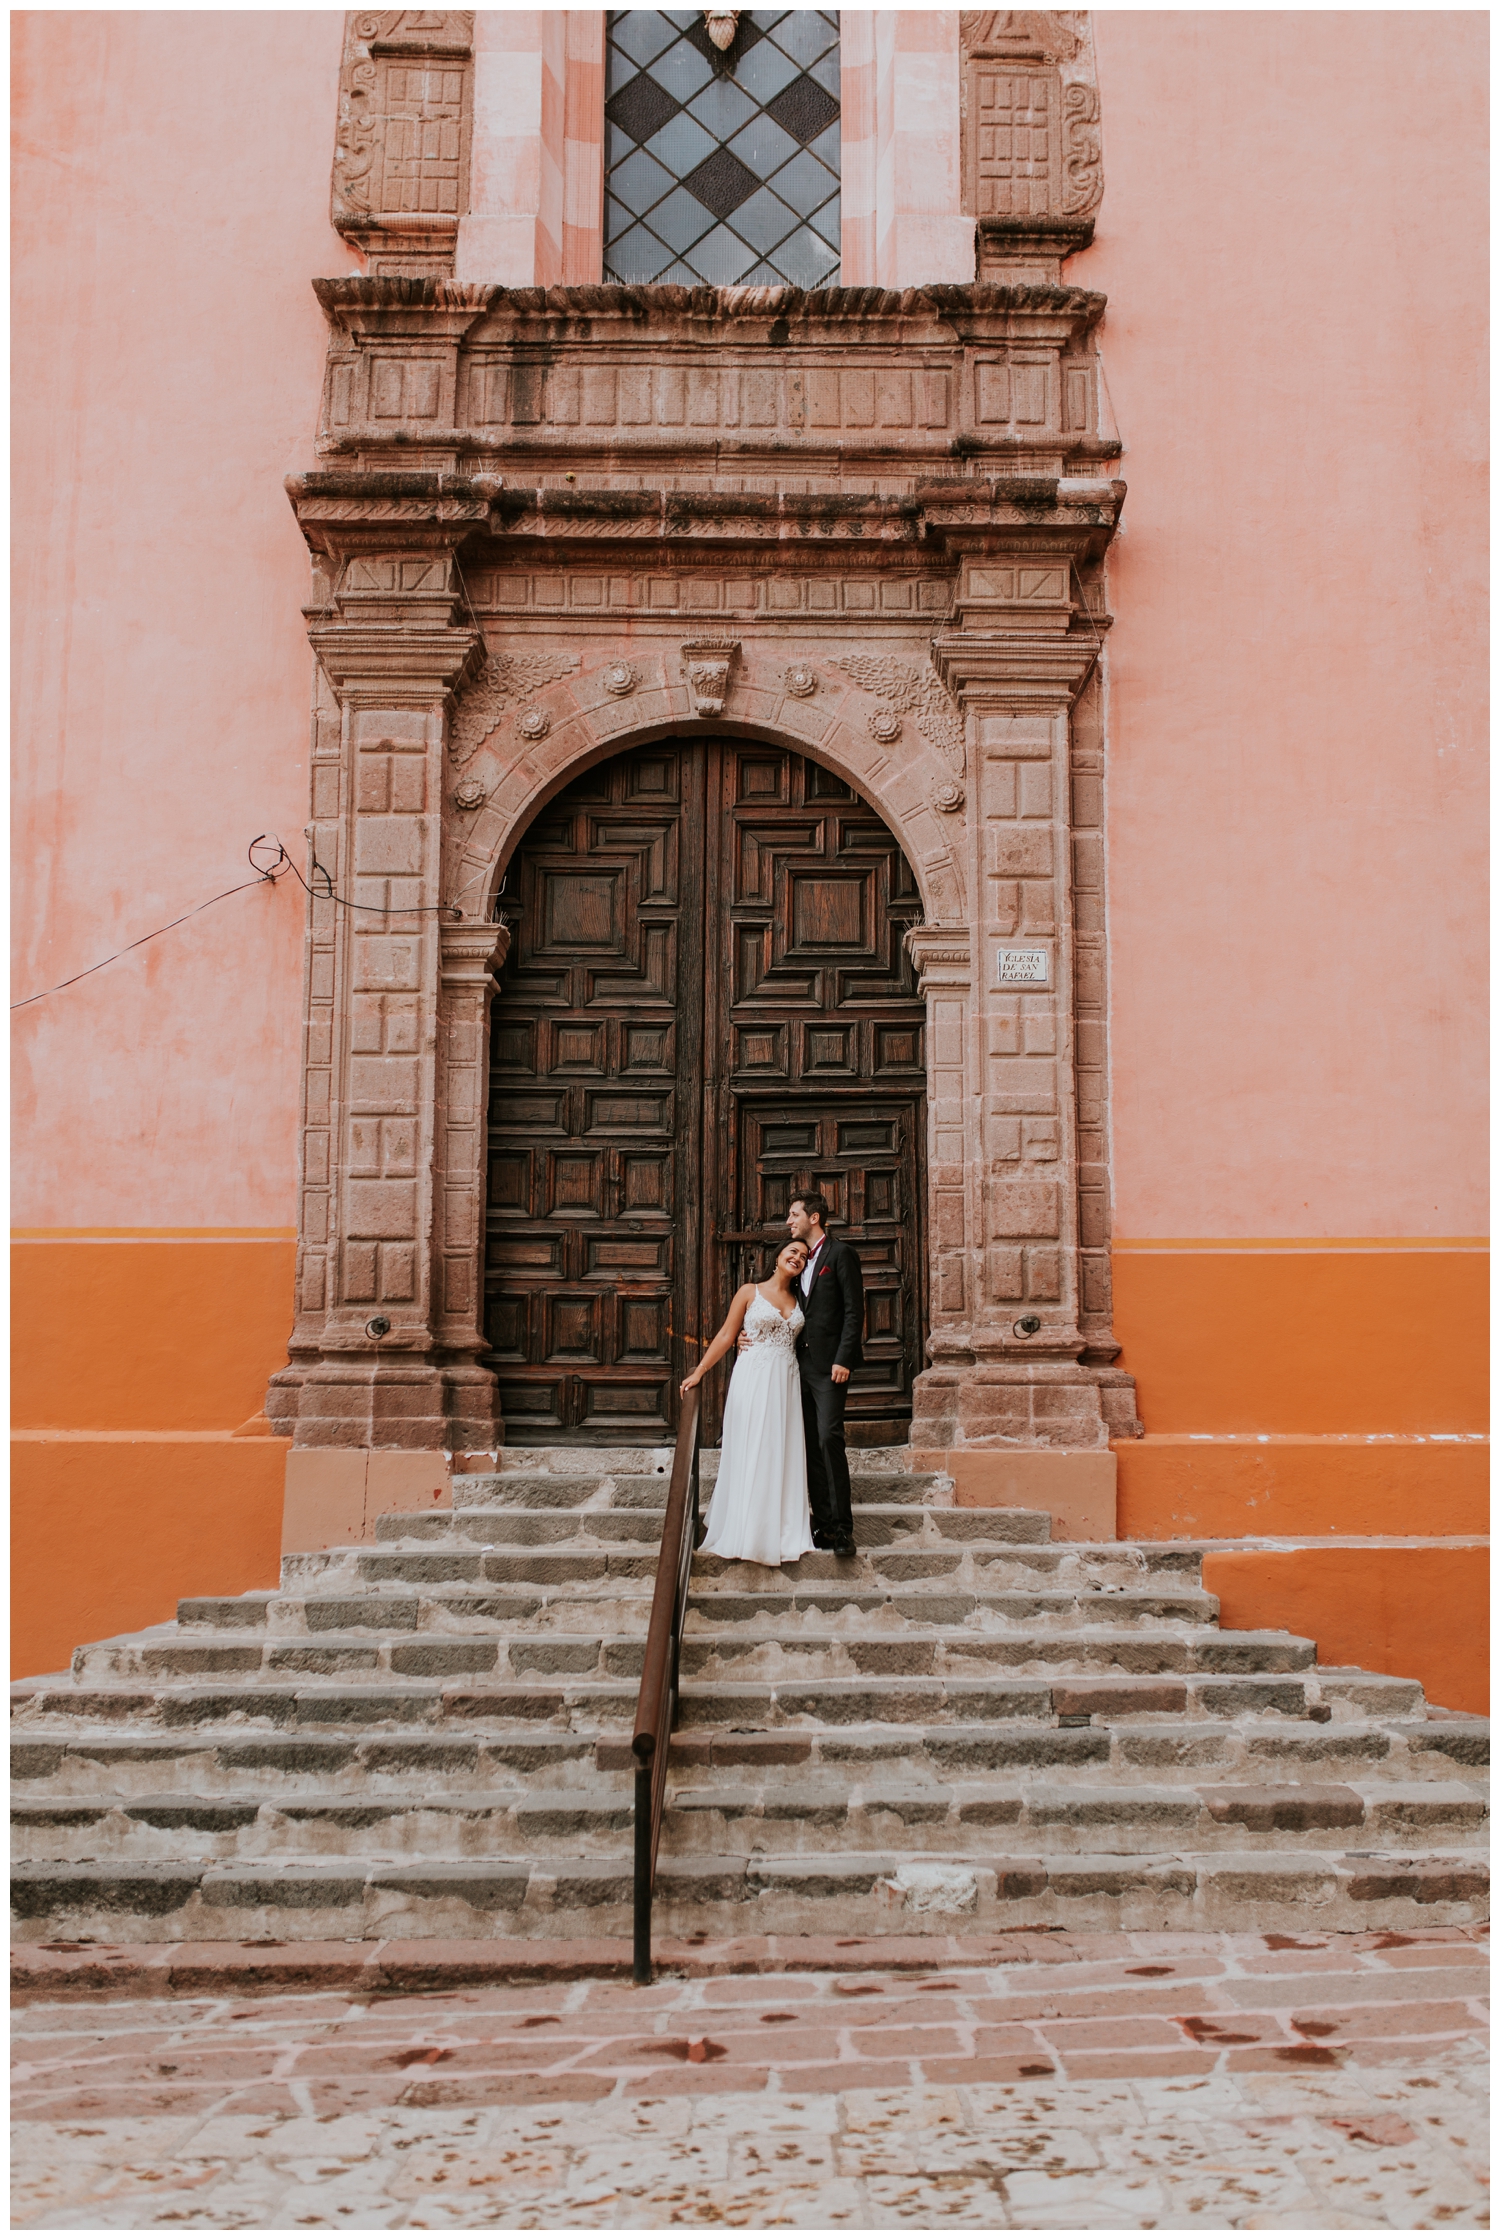 Shane+Sofia, San Miguel de Allende Wedding, Mexico Wedding, Contista Productions Wedding Photography_0226.jpg